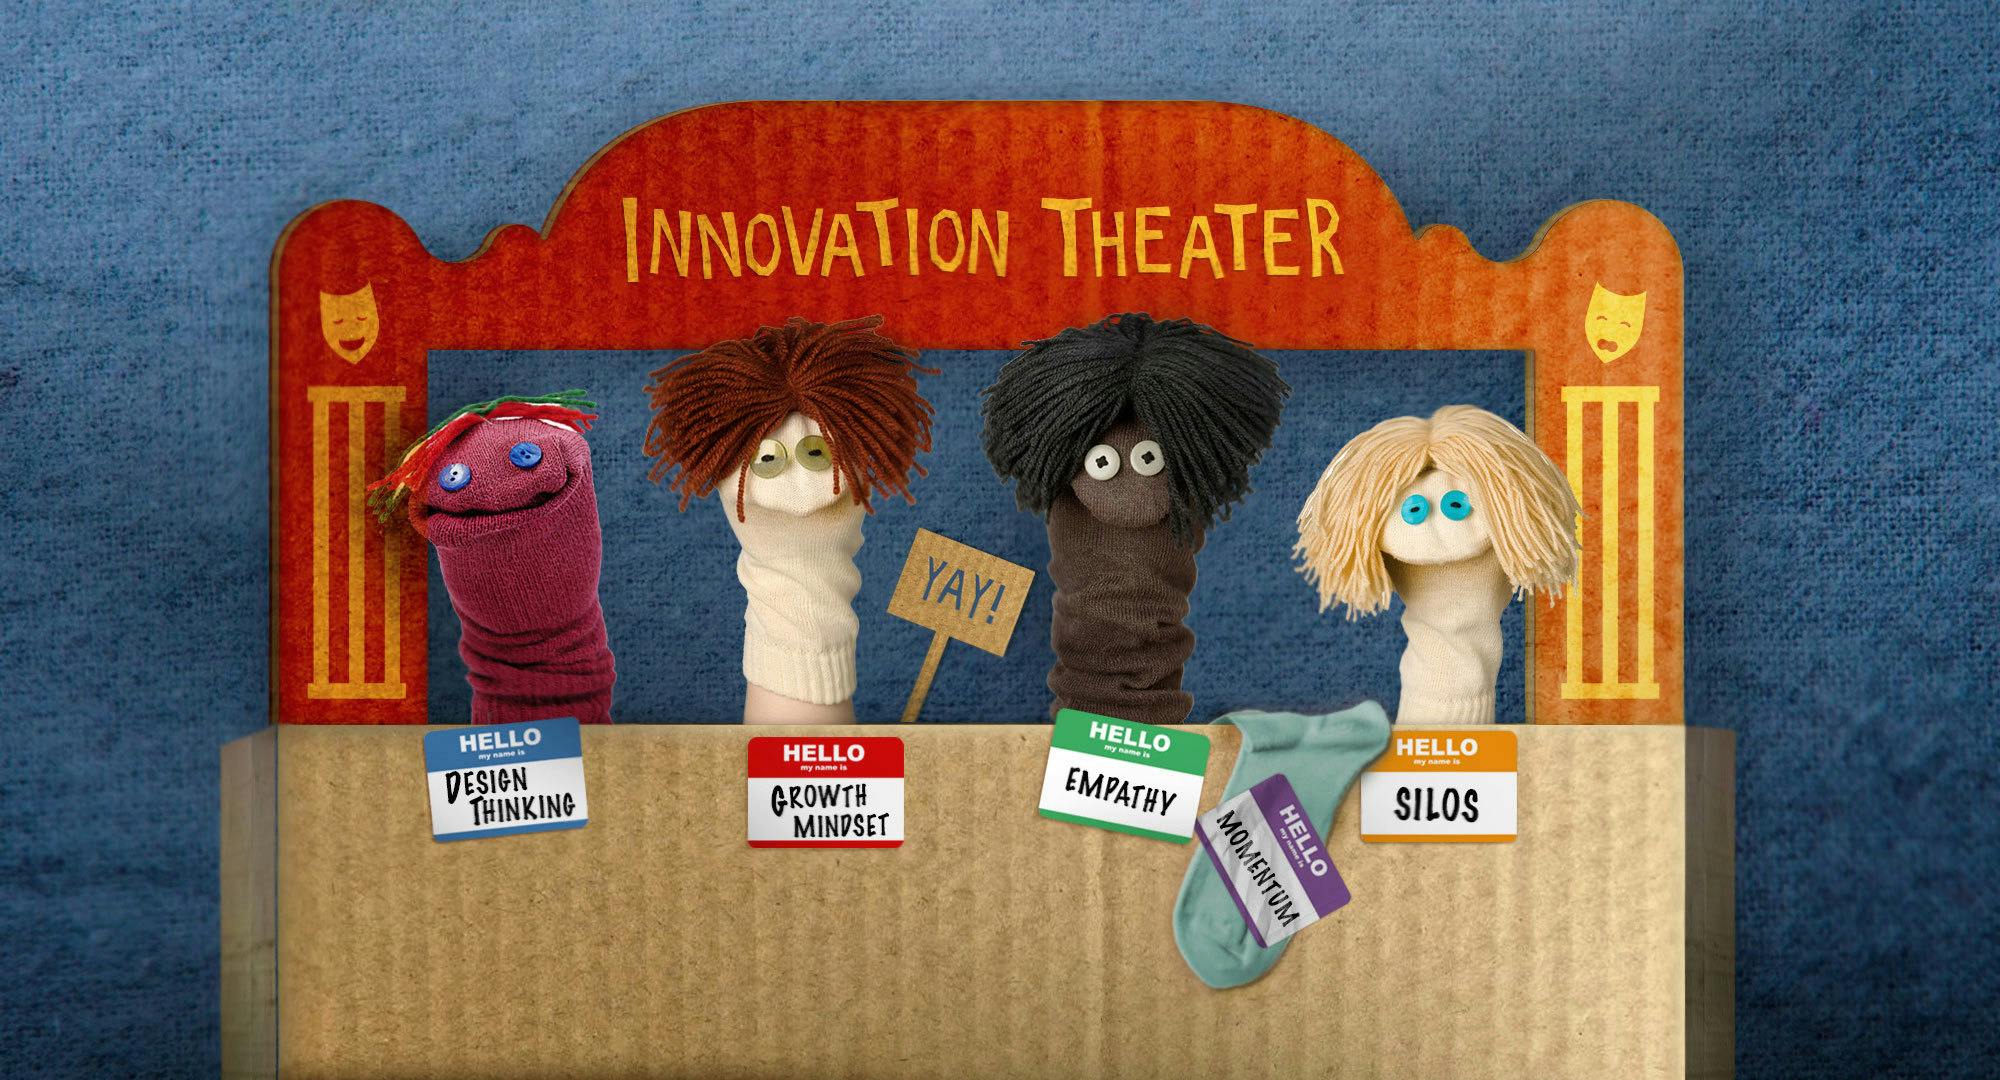 Innovation theater design thinking